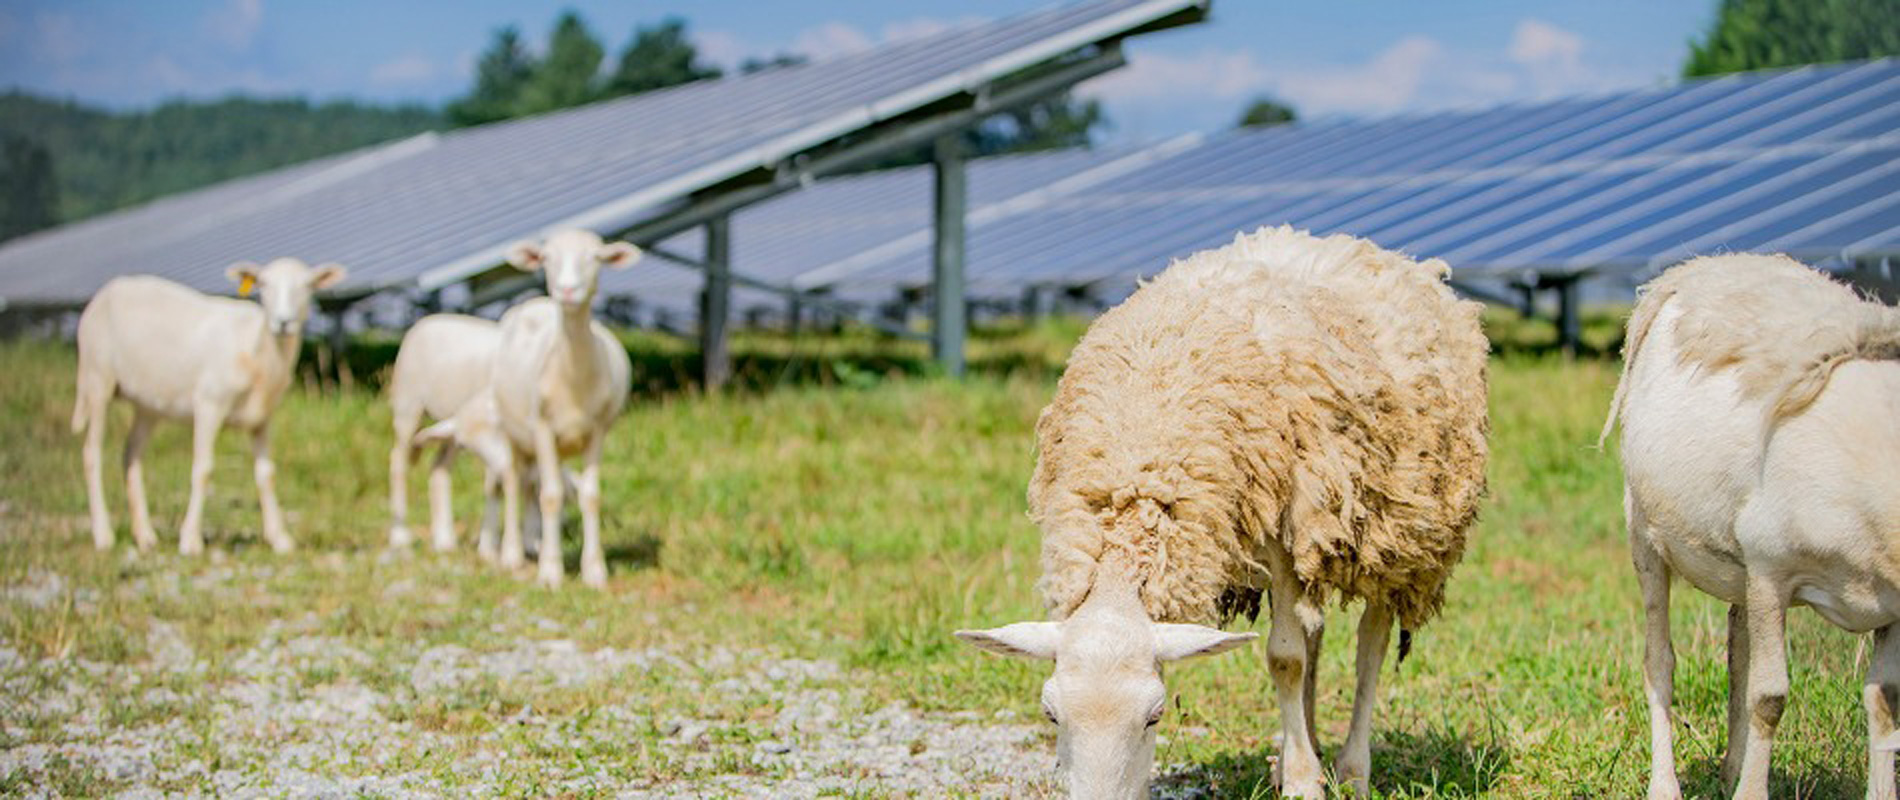 Sheep-Grazing-Solar-Panels-I